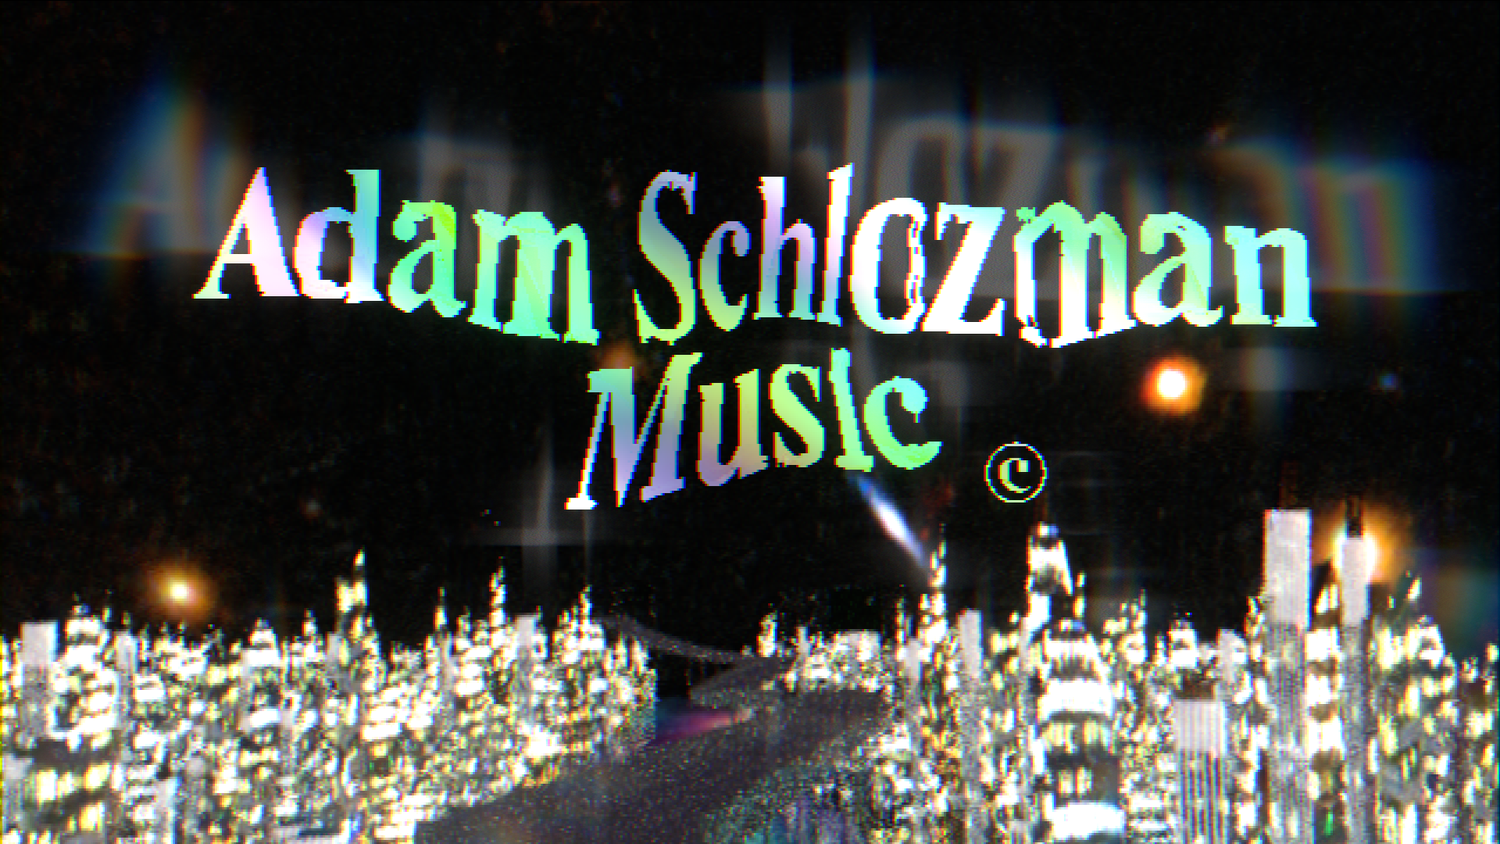 adam schlozman music